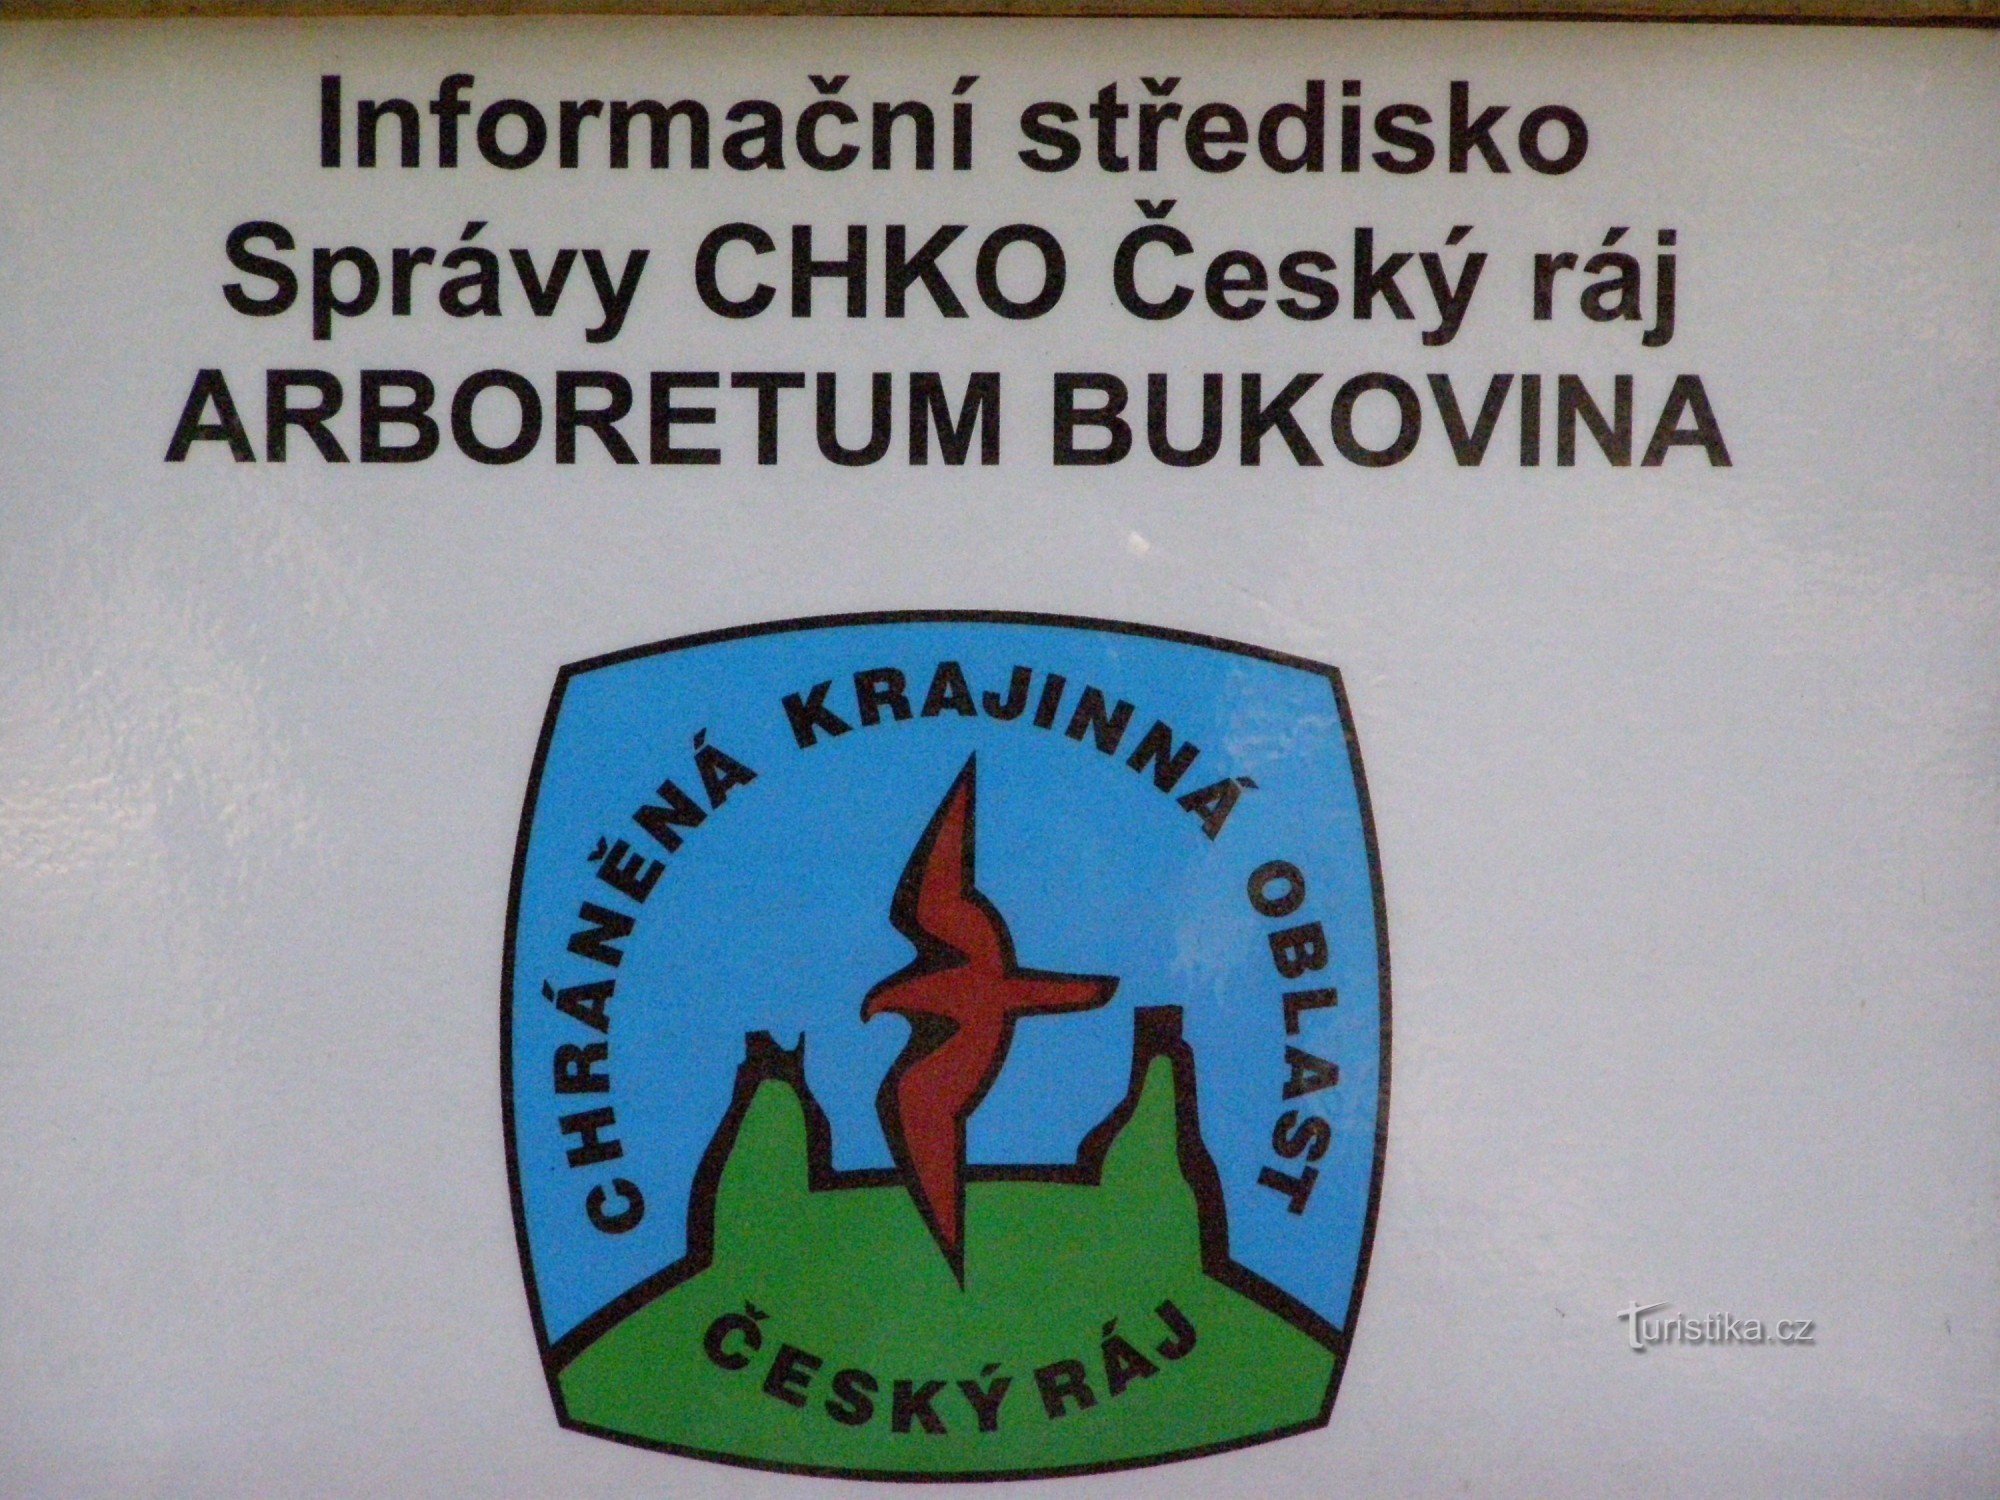 Bukovina Arboretum - Bohemian Paradise PLA:n kausiluonteinen tietokeskus